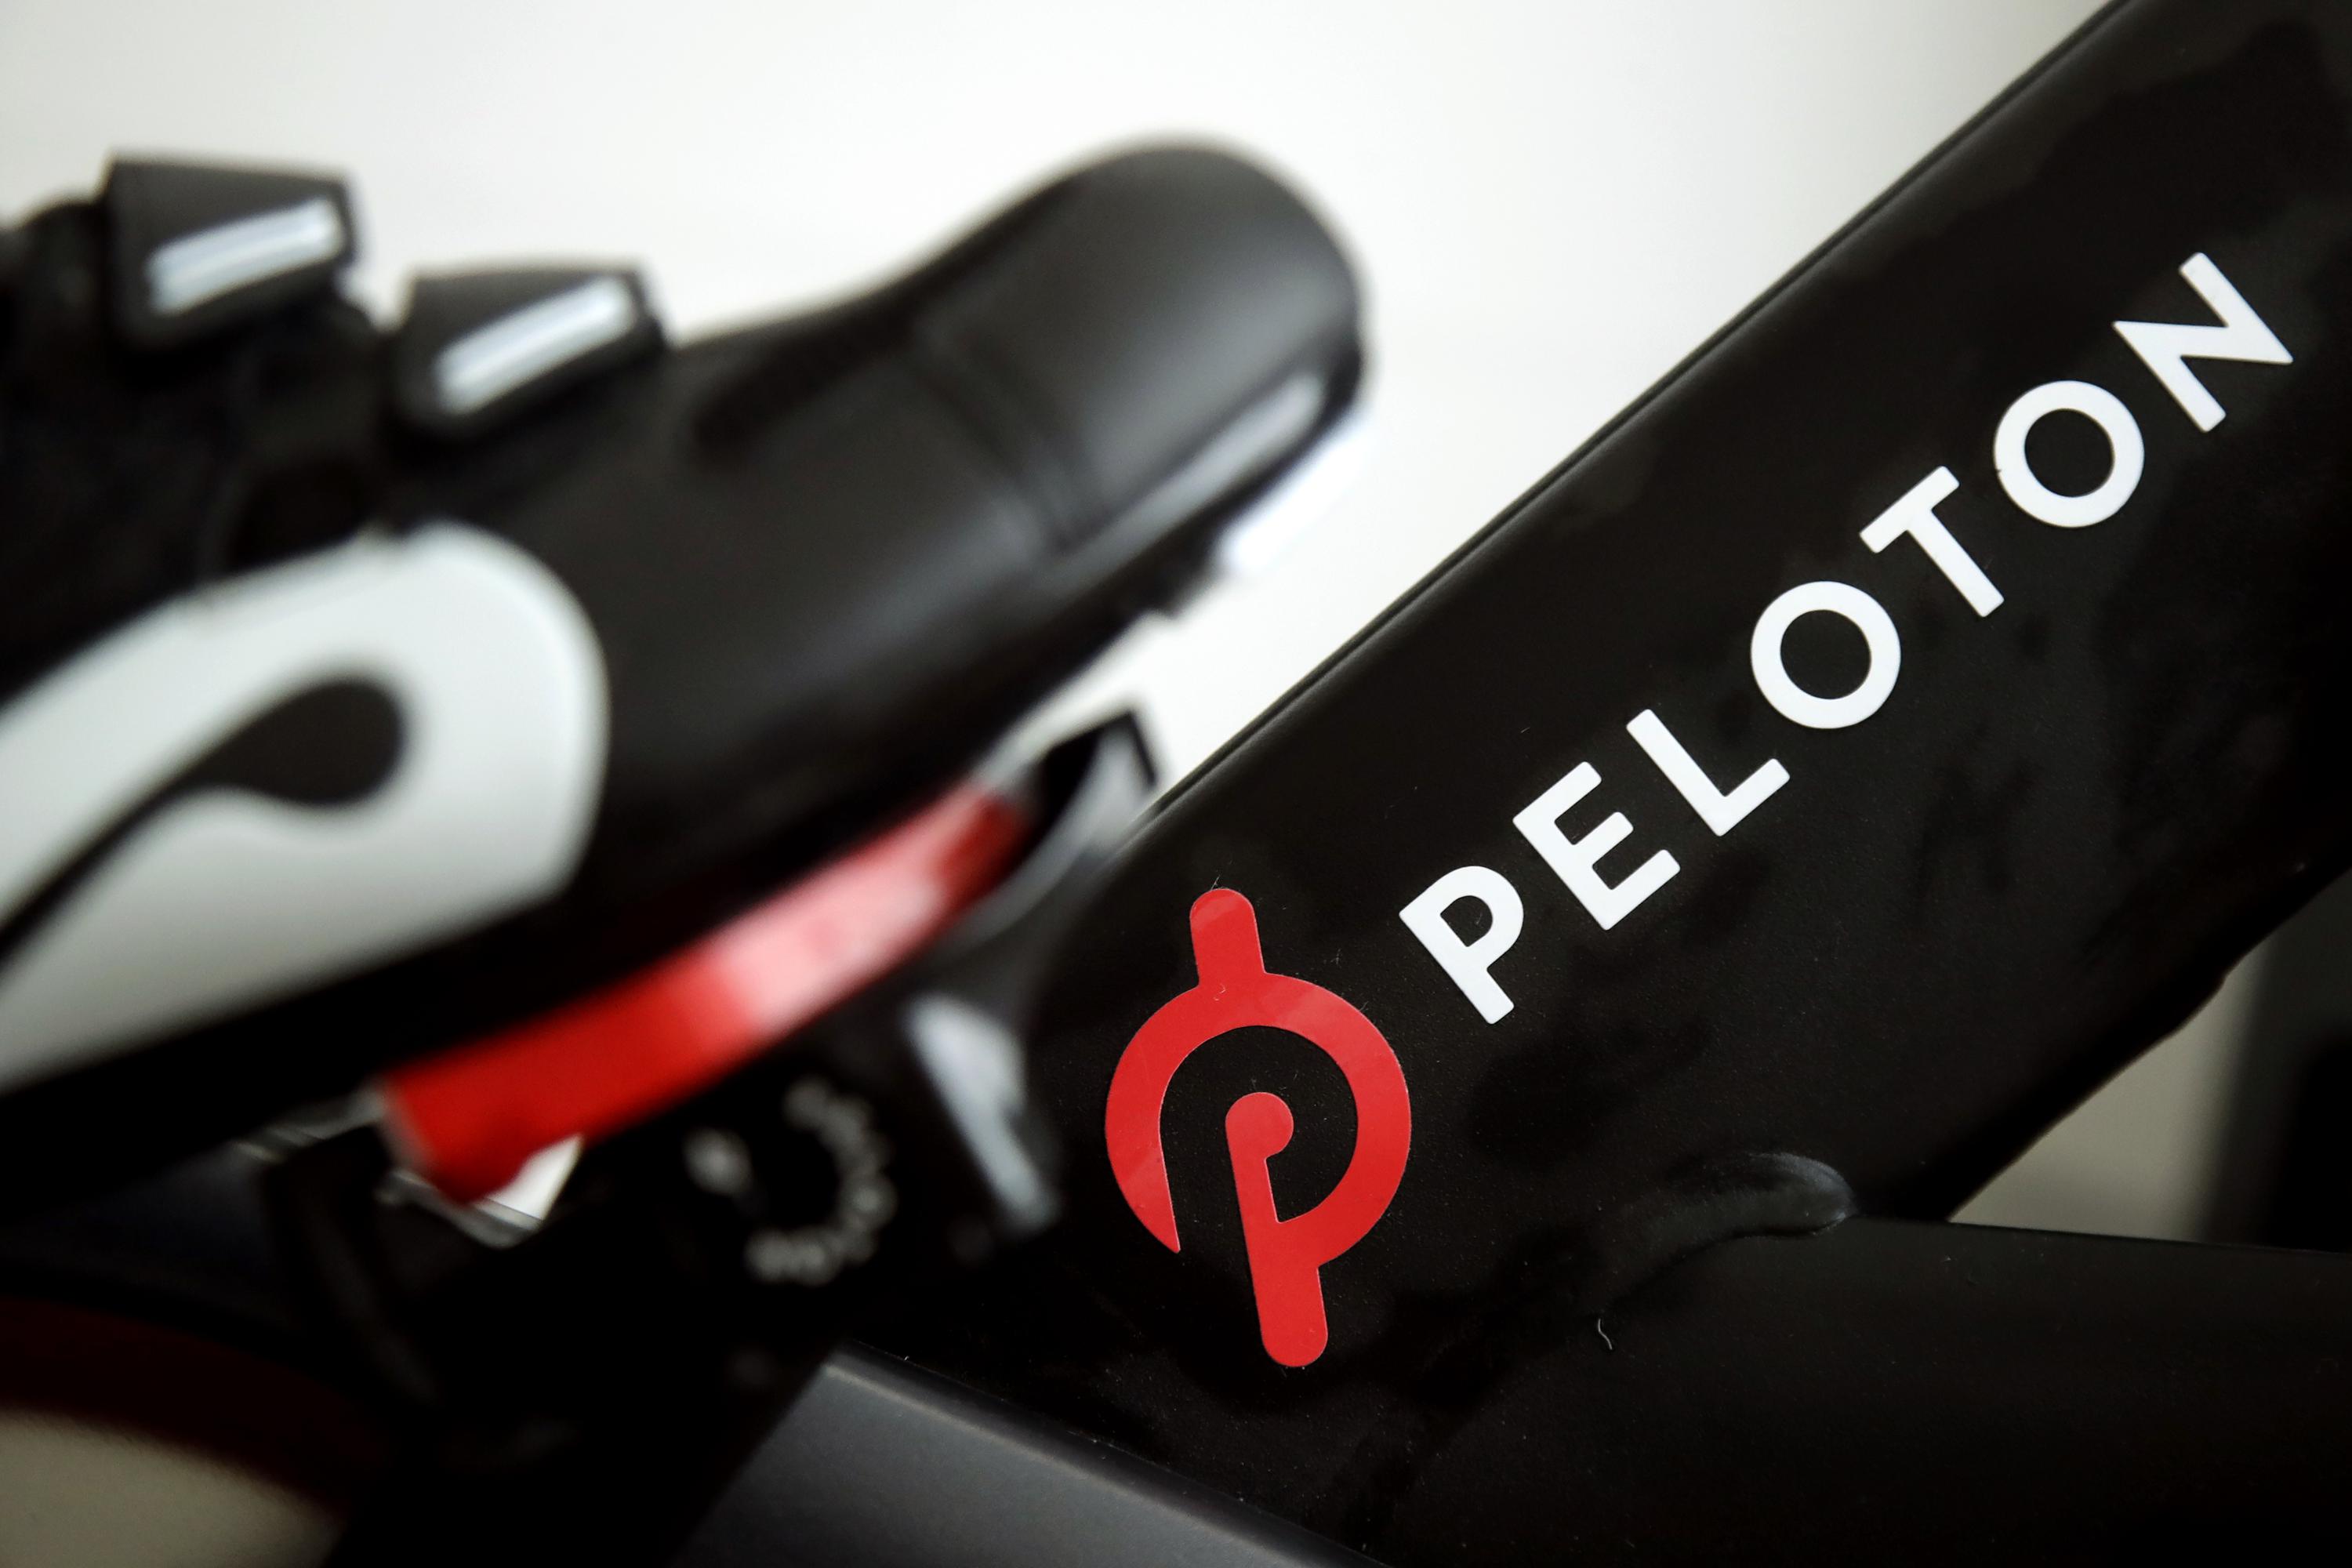 Peloton stock skids as company posts loss, cuts bike price